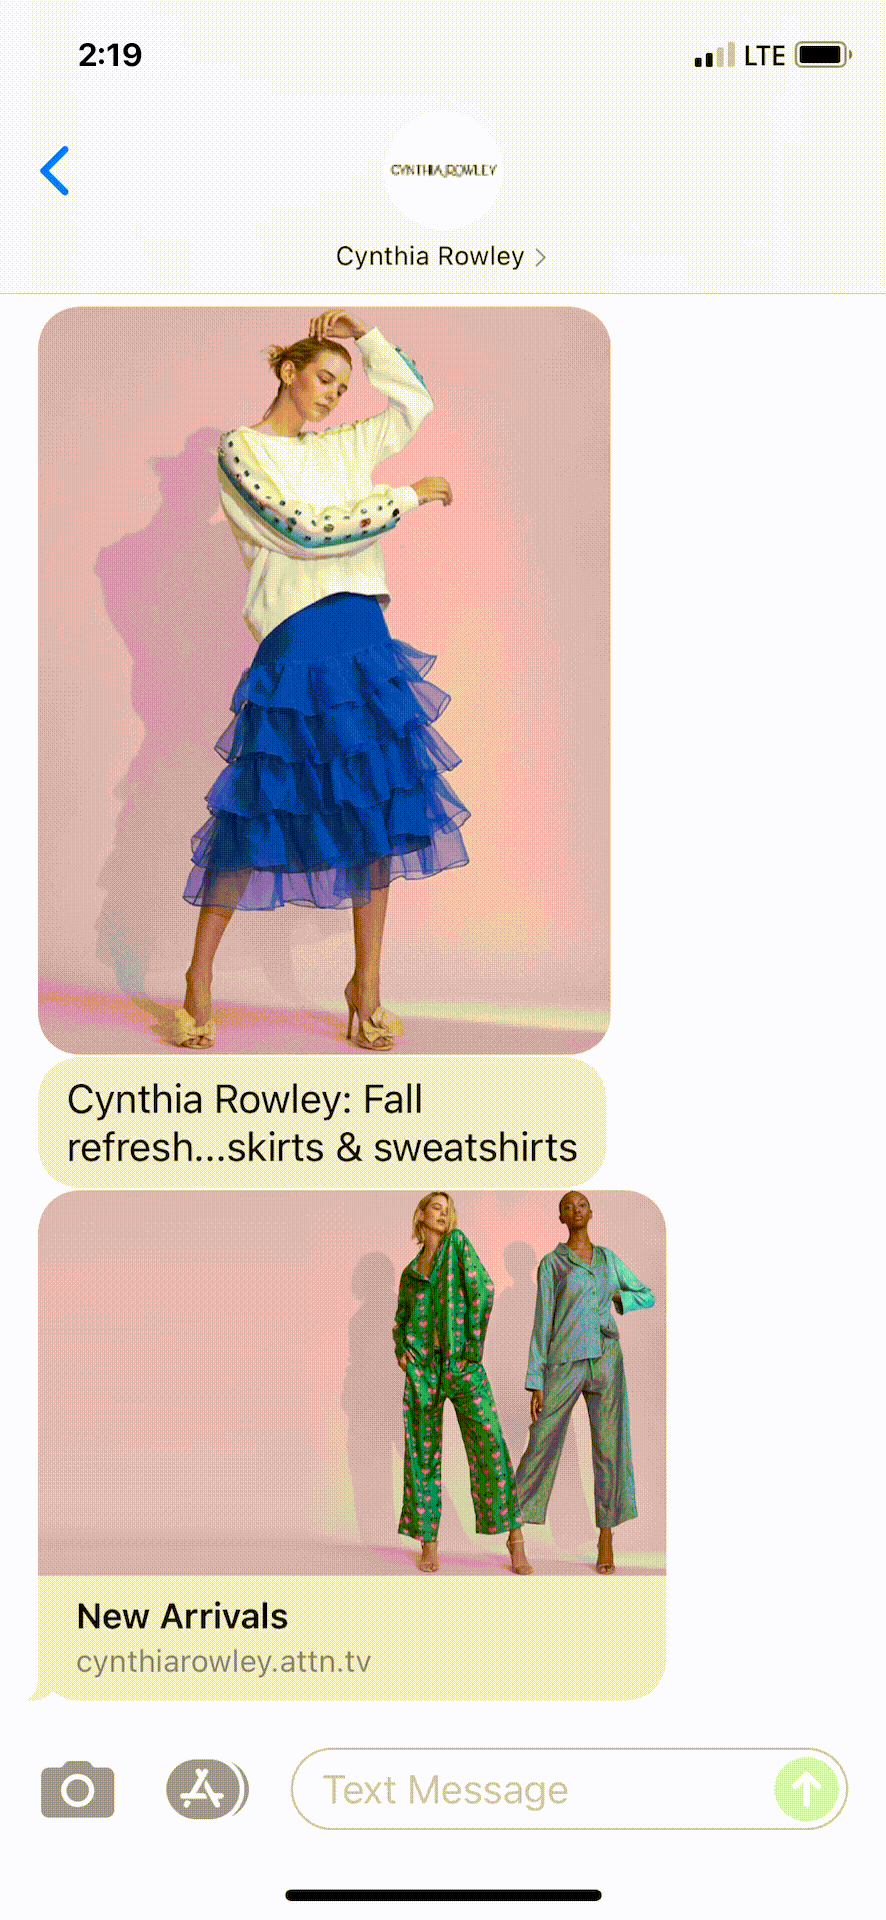 Cynthia-Rowley-Text-Message-Marketing-Example-10.03.2021